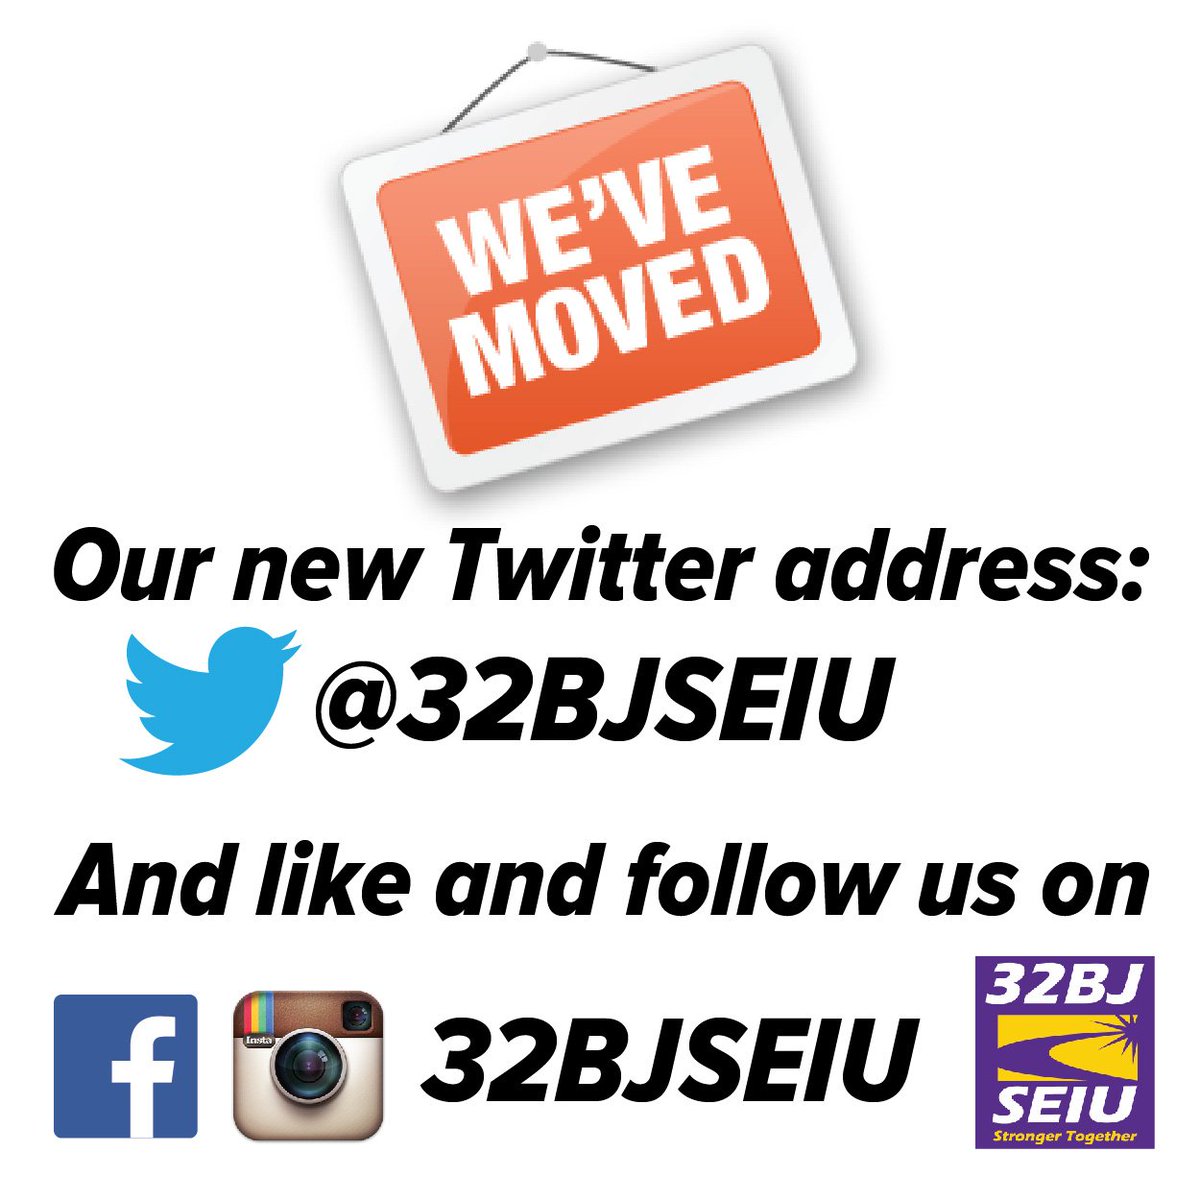 Please note, we've moved to @32BJSEIU! #1u